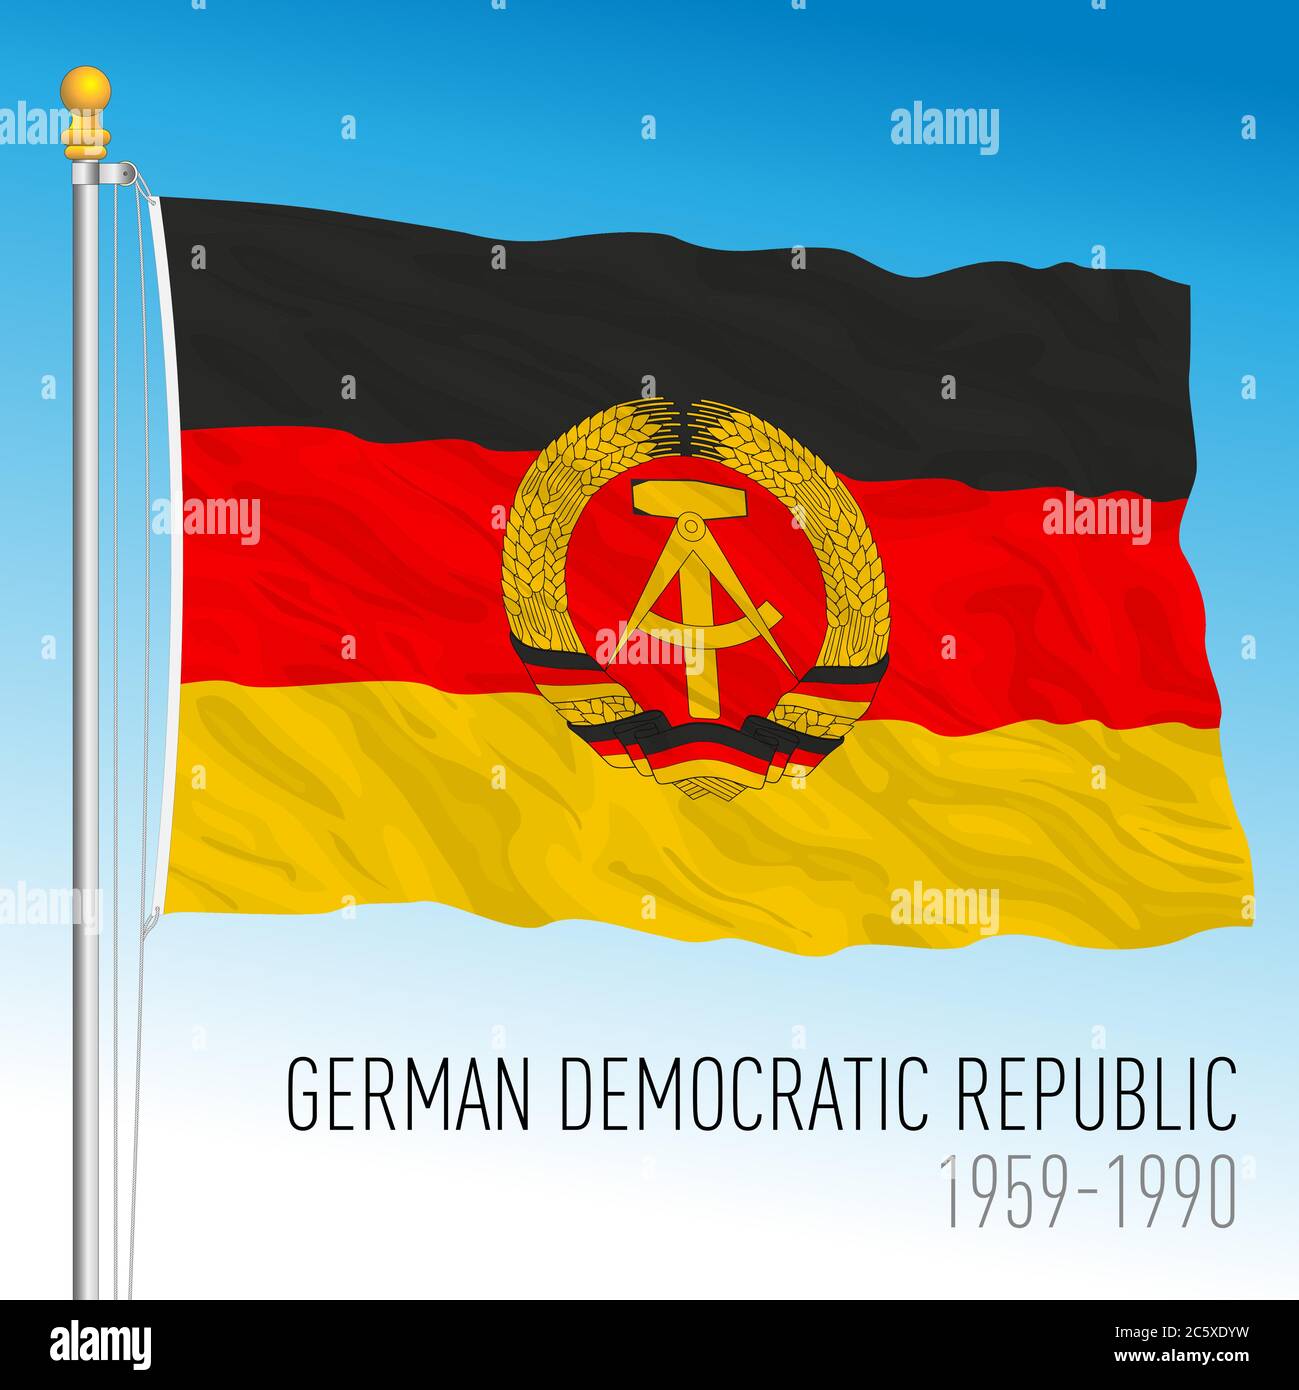 Deutsche Demokratische Republik historische Flagge, Deutschland, 1959-1990, Vektorgrafik Stock Vektor